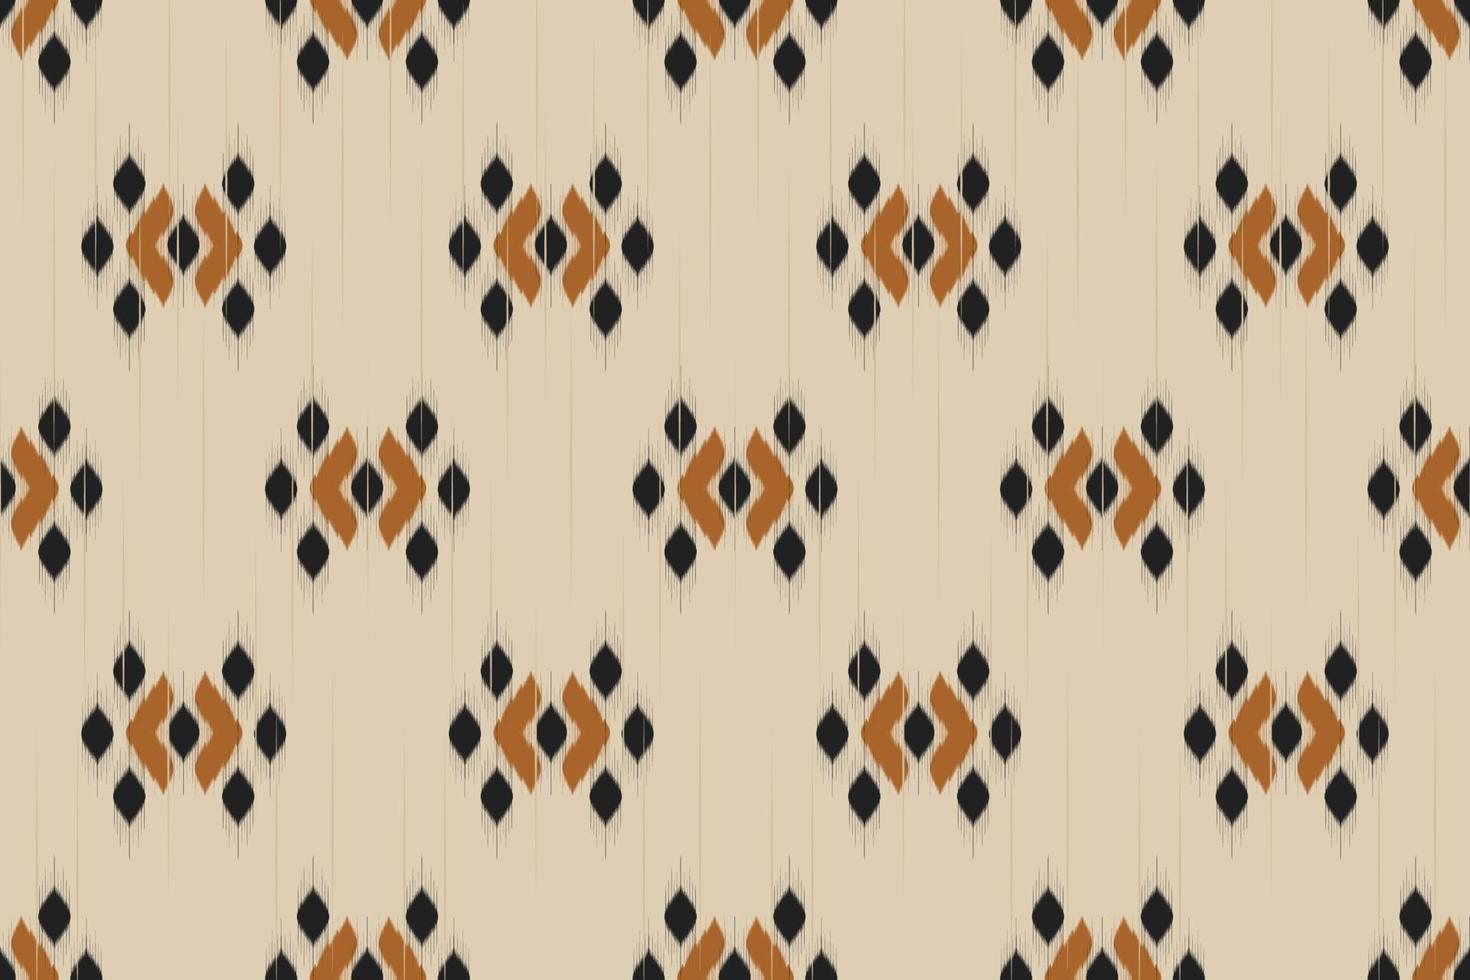 Ethnic ikat seamless pattern. Design for background, wallpaper, vector illustration, fabric, clothing, batik, carpet, embroidery.